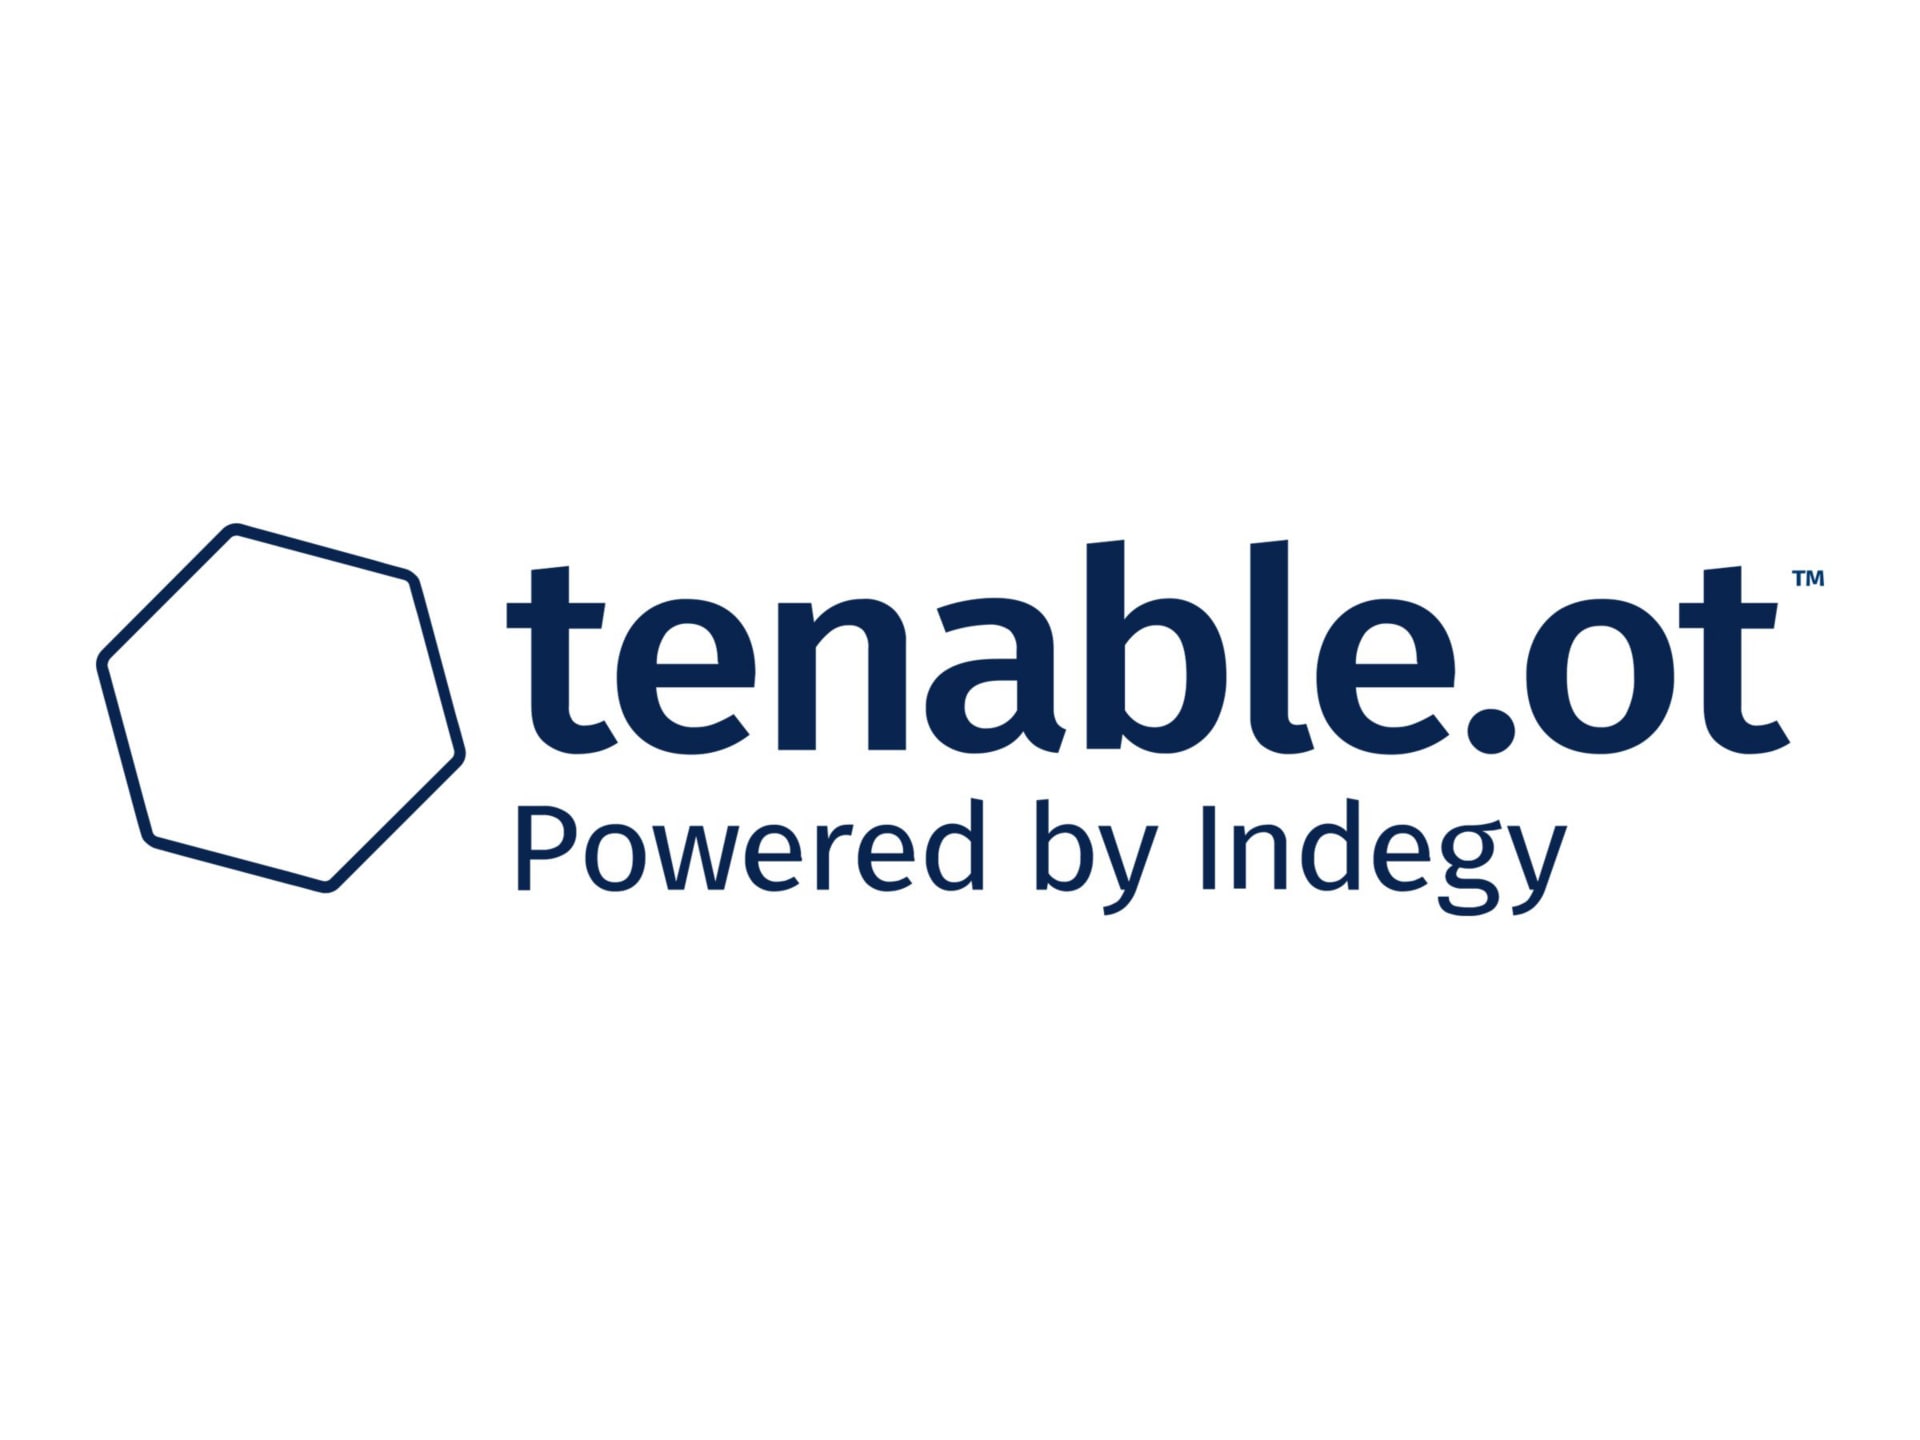 Tenable.ot - subscription license - 1 asset